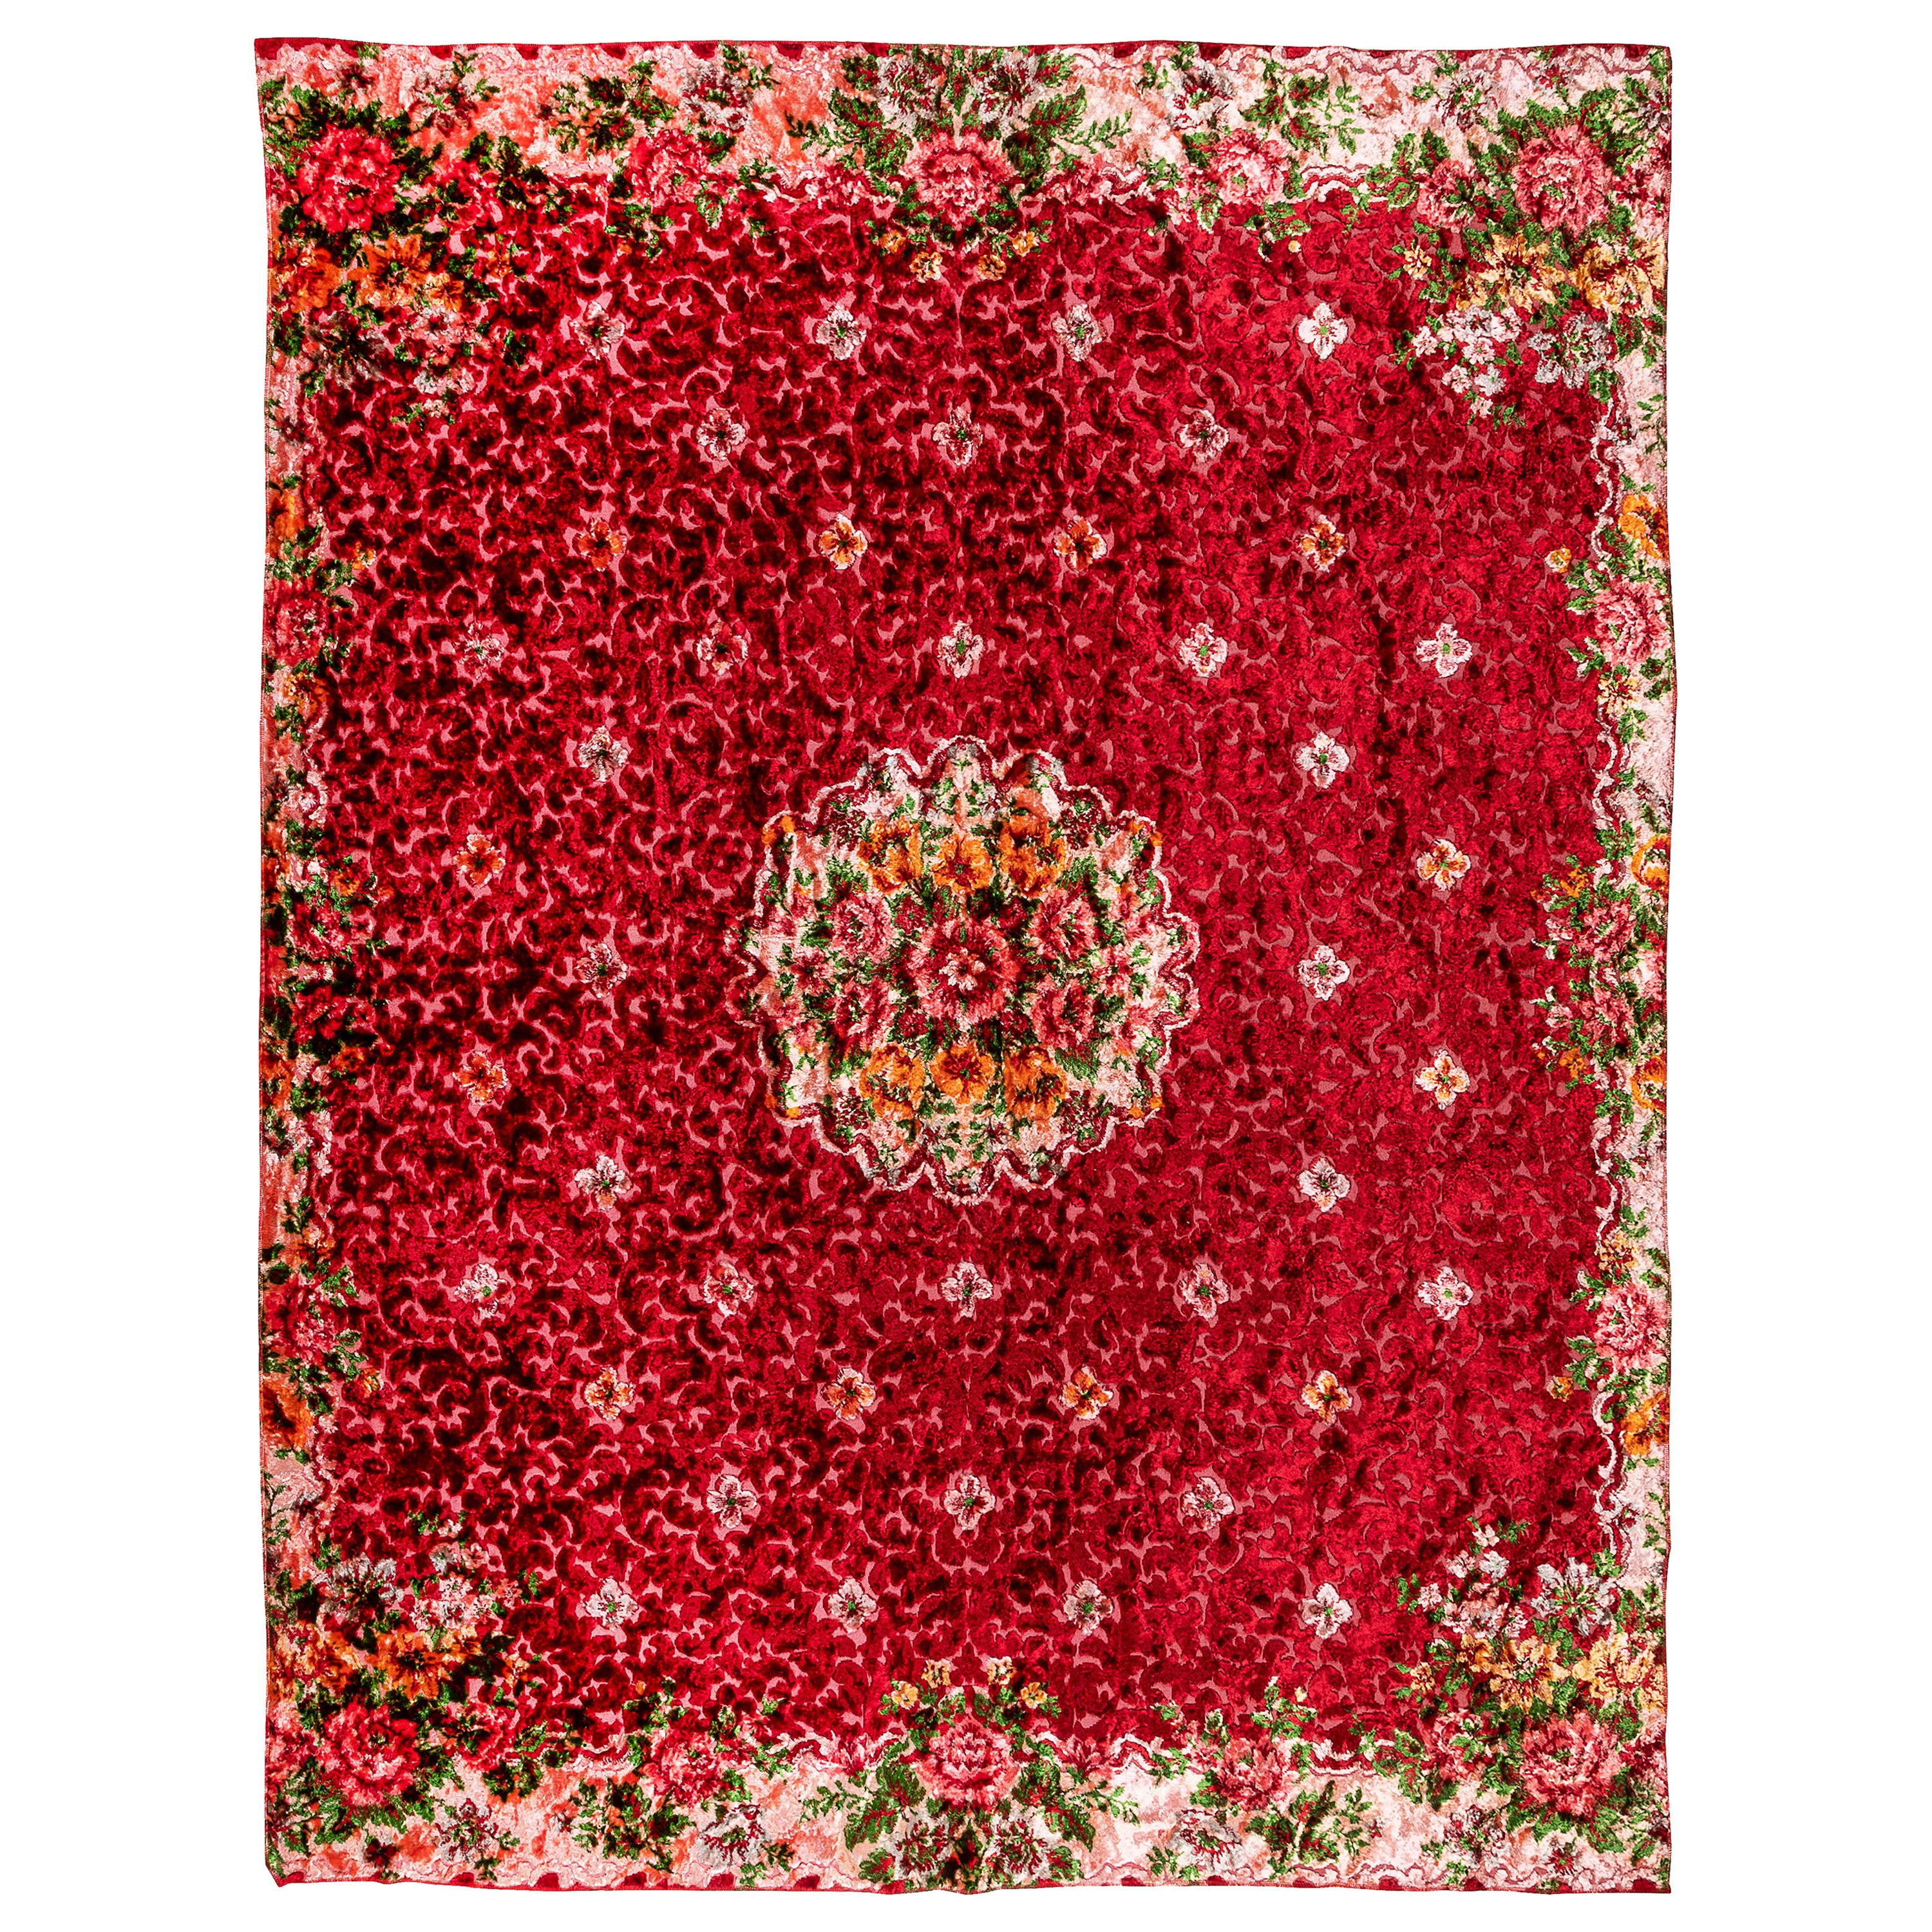 5.7x7 Ft One of a Kind Vintage Floral Design Velvet Wall Hanging, Red Bed Cover